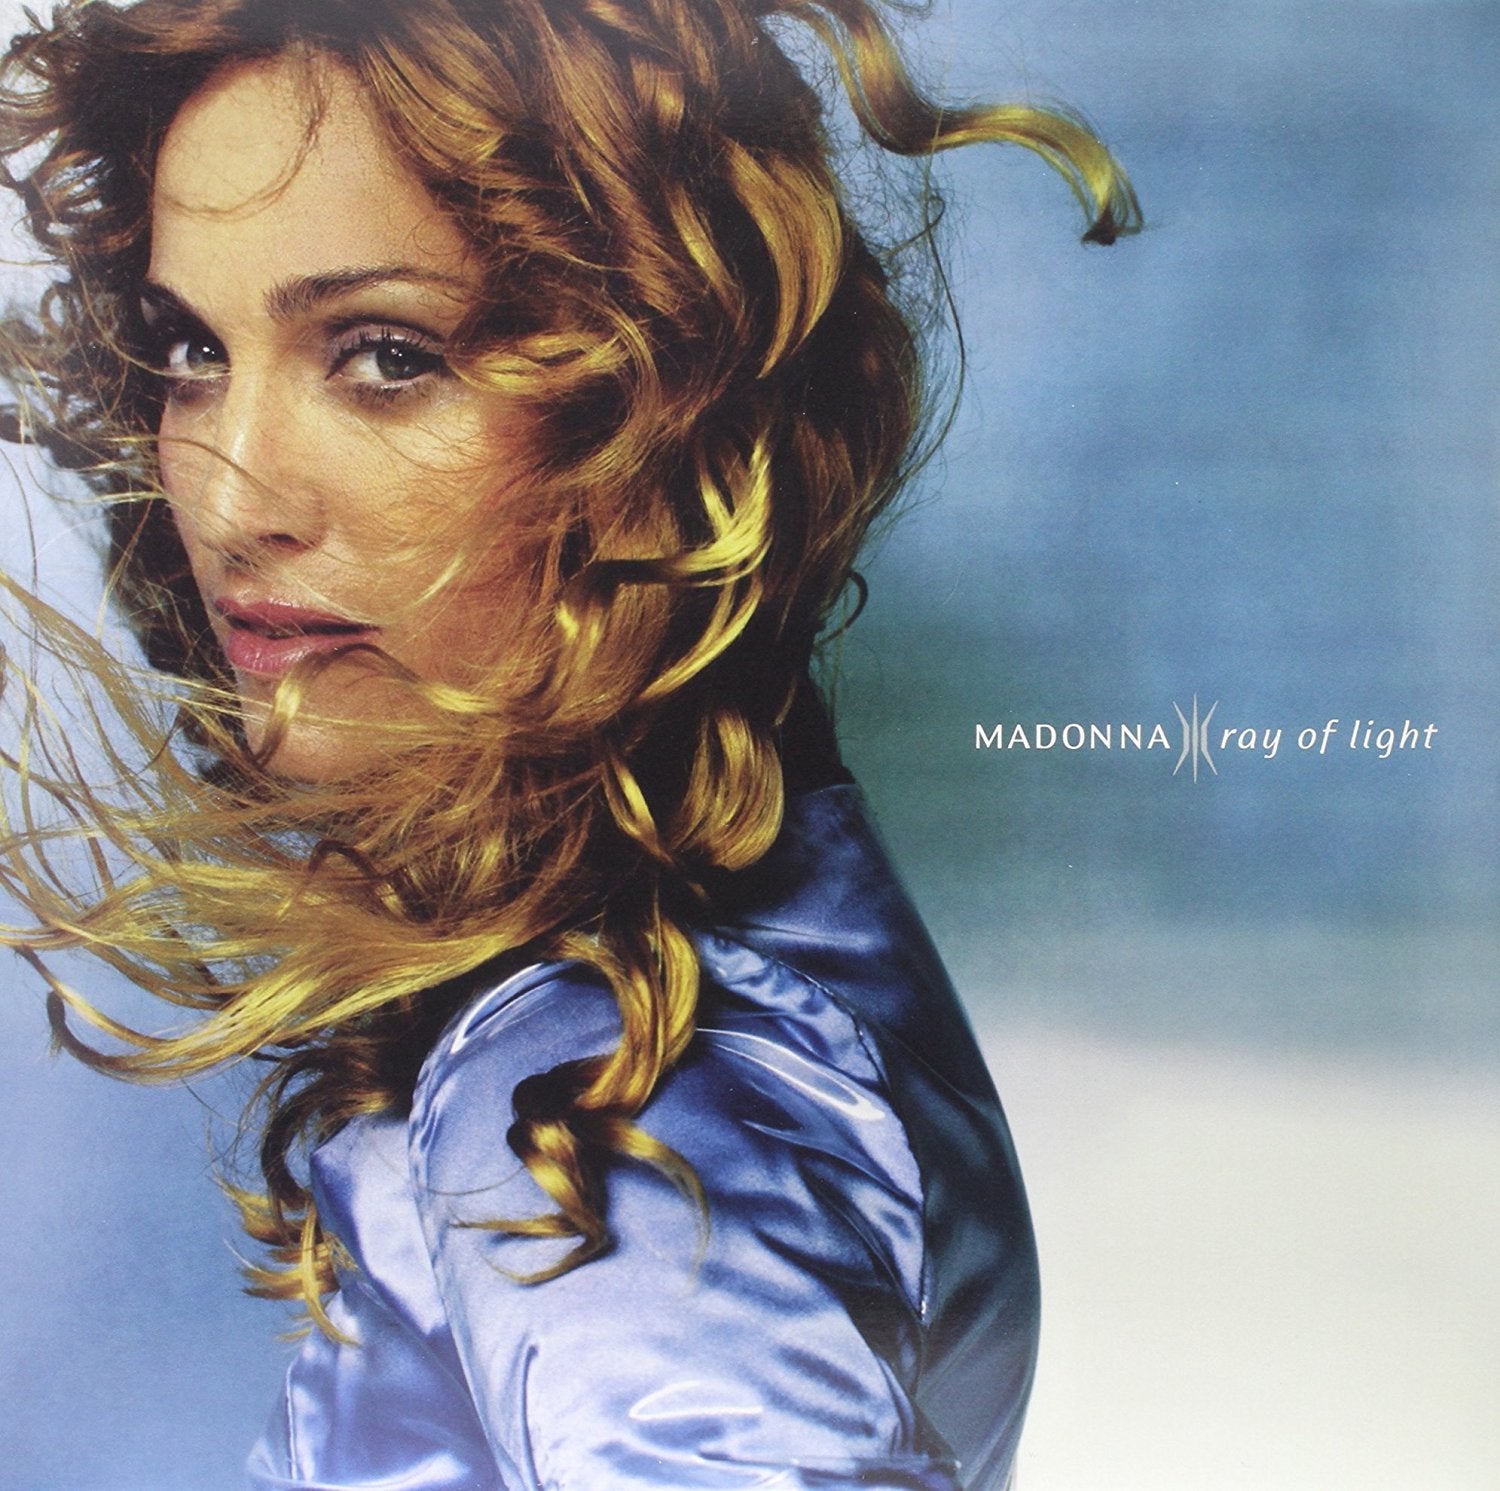 The 10 Best Madonna Albums To Own On Vinyl - Vinyl Me, Please